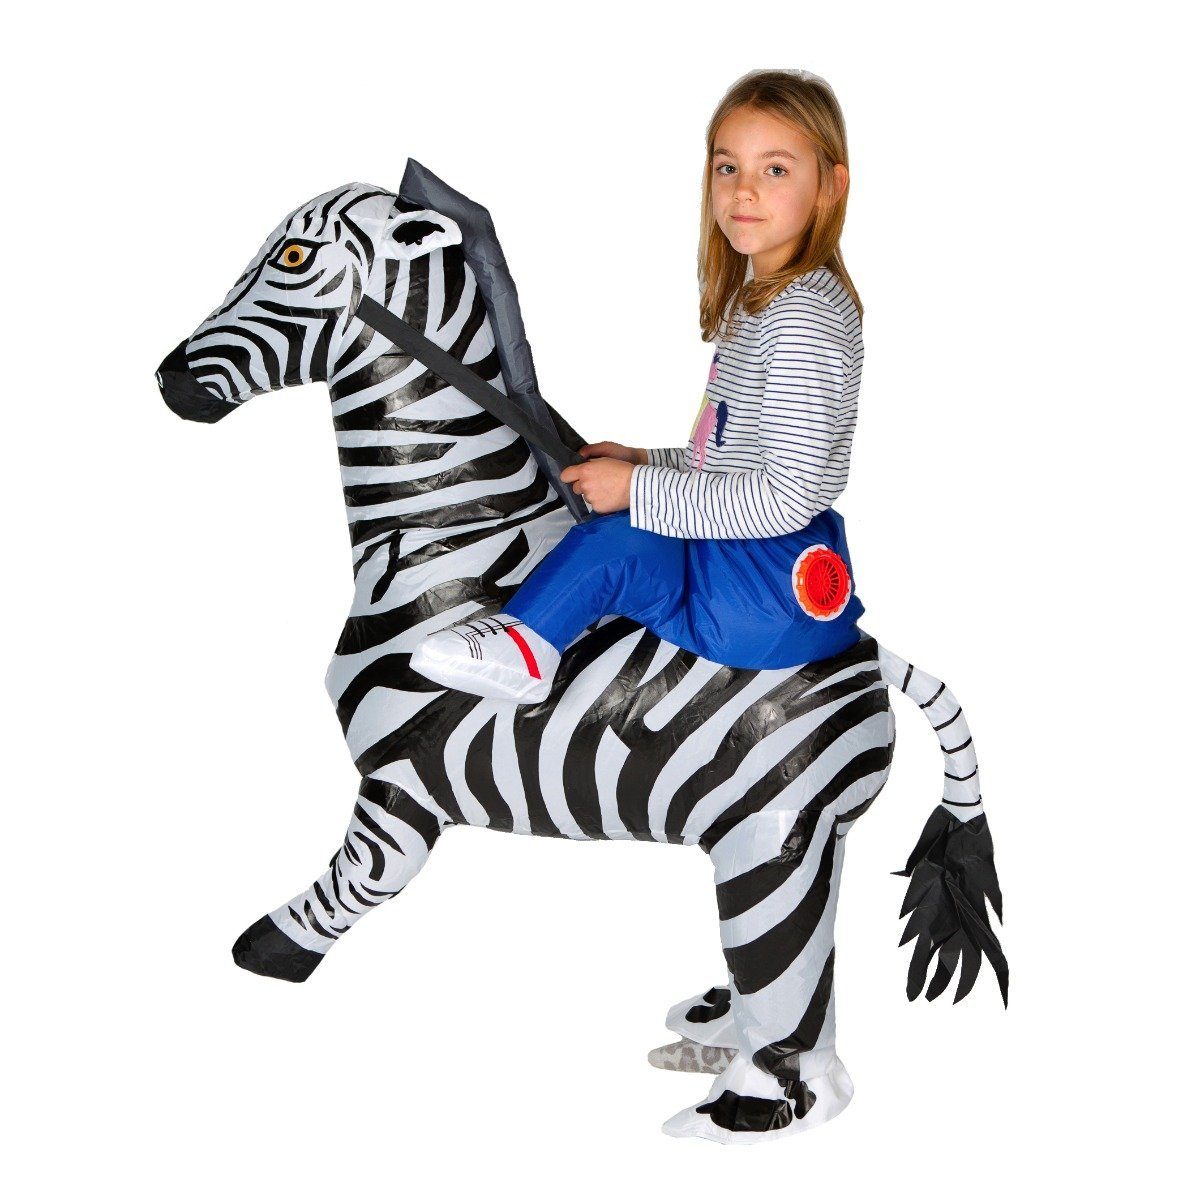 Fancy Dress - Kids Inflatable Zebra Costume